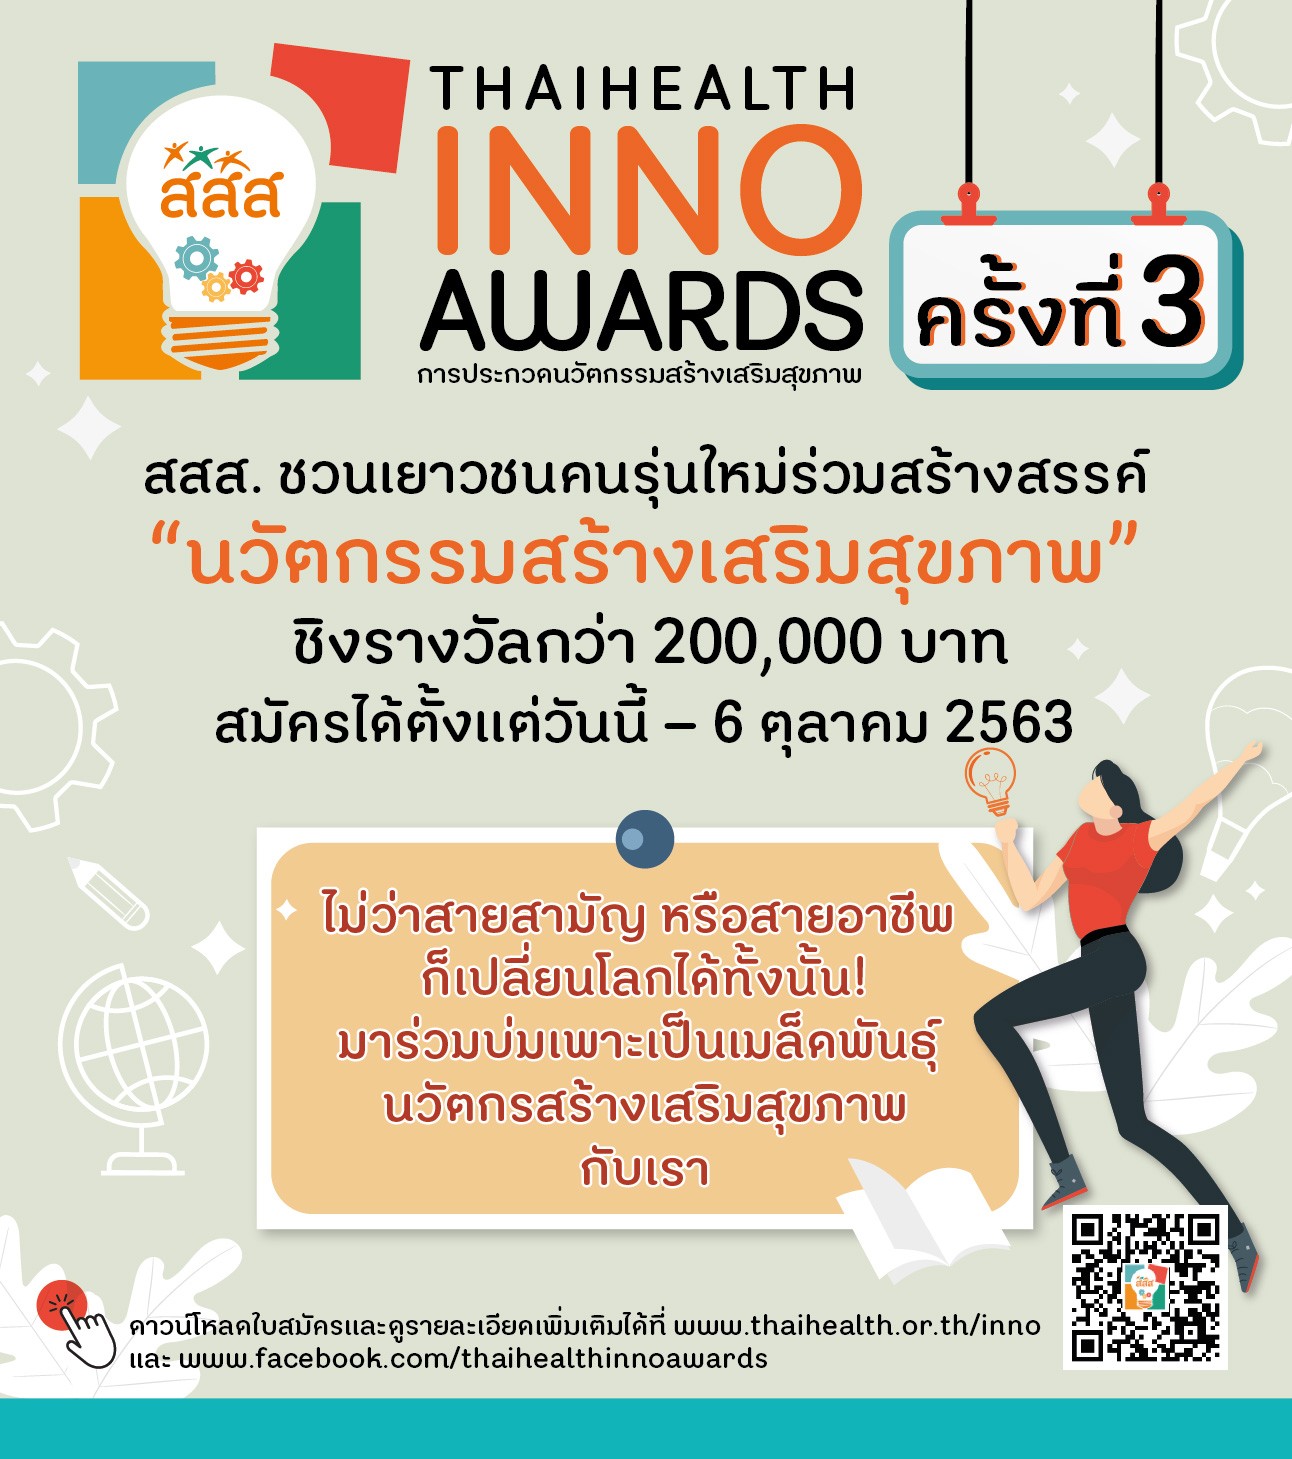 ThaiHealth Inno Awards 3 รับสมัครไอเดีย "นวัตกรรมสร้างเสริมสุขภาพ" ชิงรางวัลรวมมูลค่ากว่า 200,000 บาท